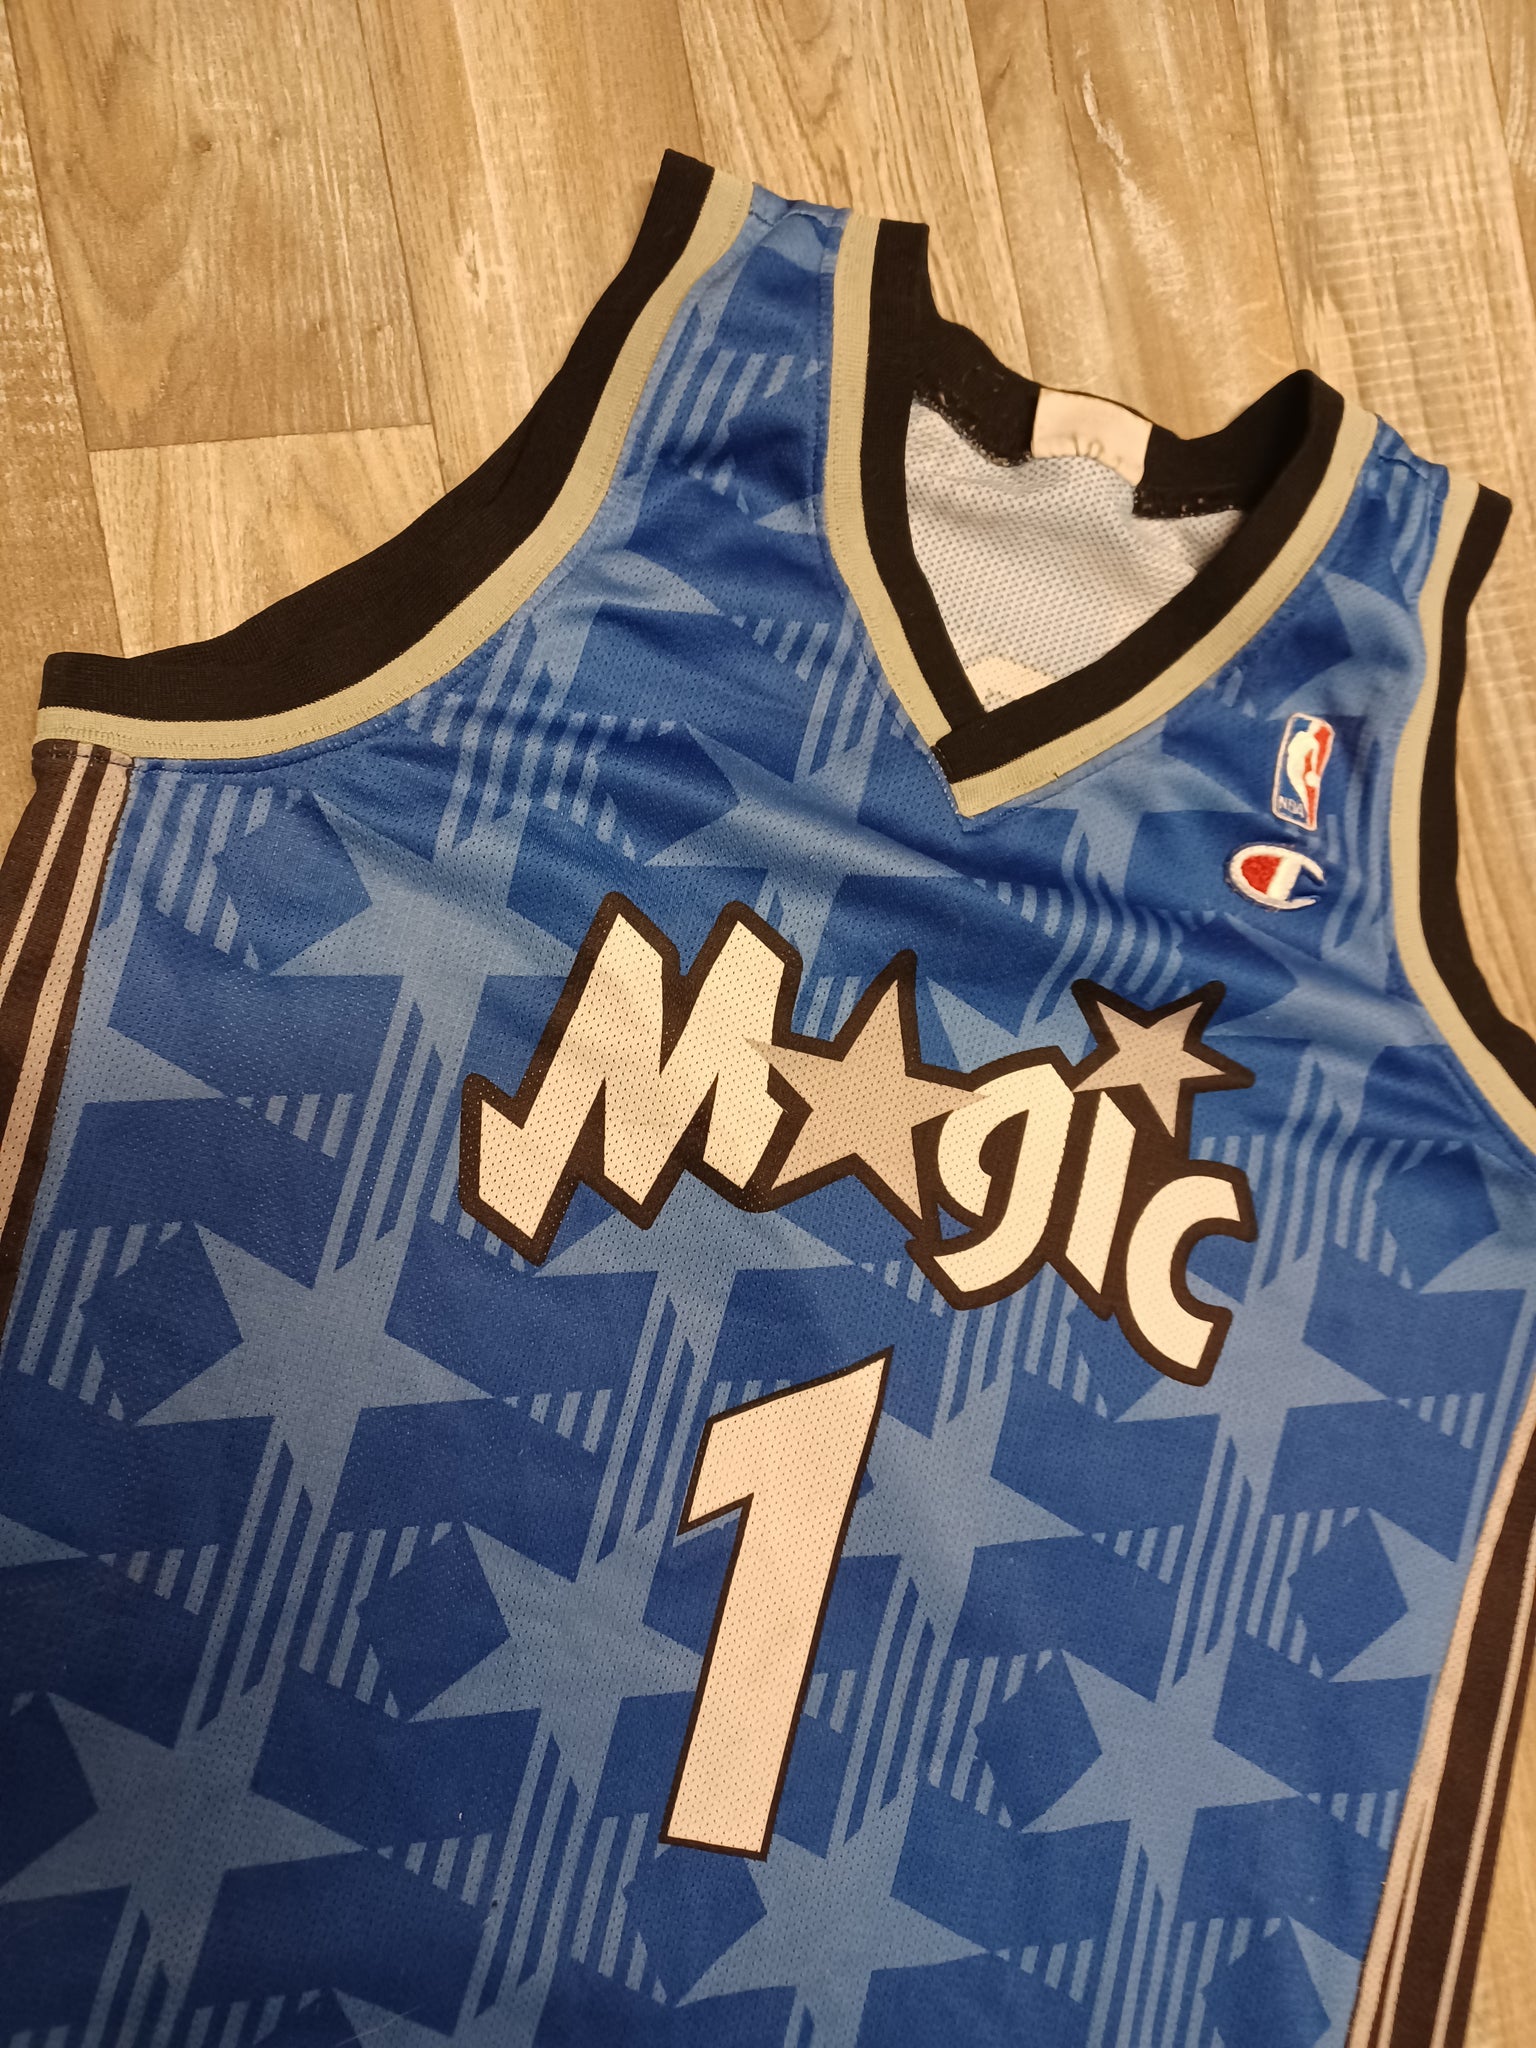 🏀 Tracy McGrady Orlando Magic Jersey Size Medium – The Throwback